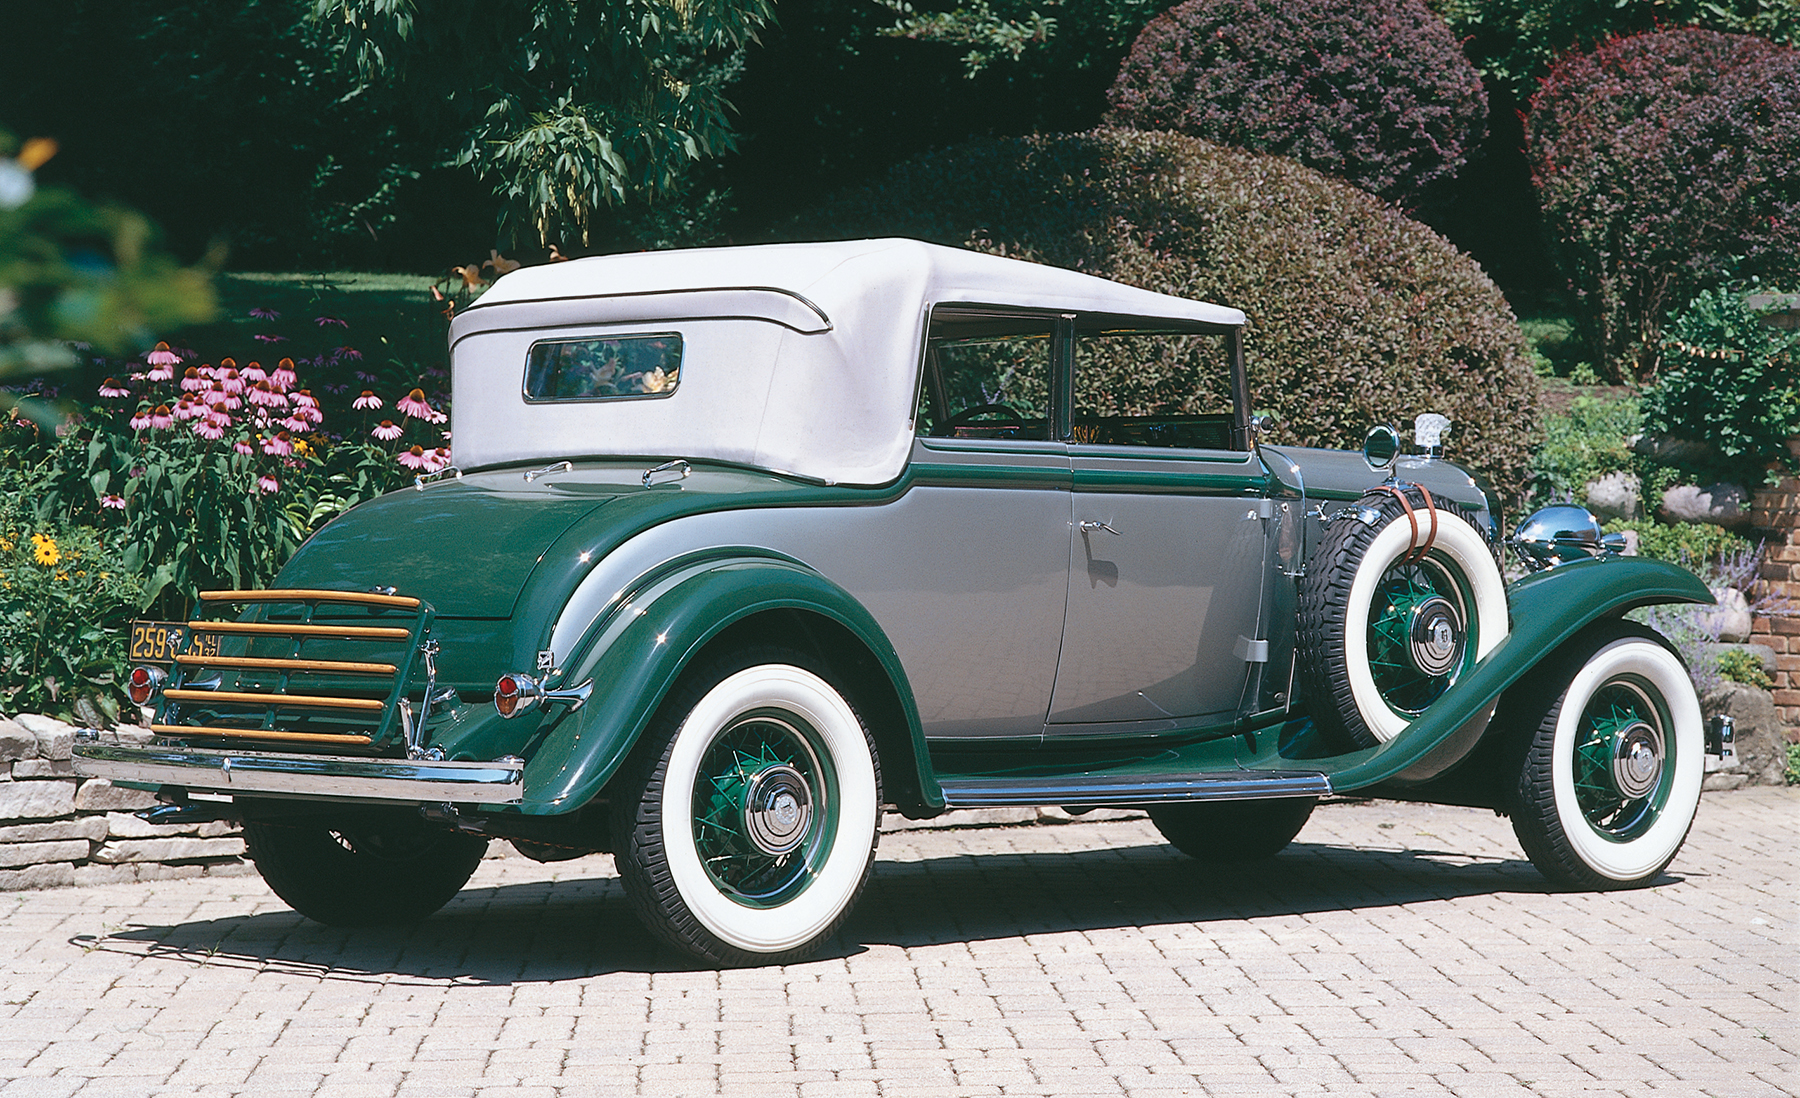 Photo Feature: 1932 Buick Series 90 Convertible Phaeton